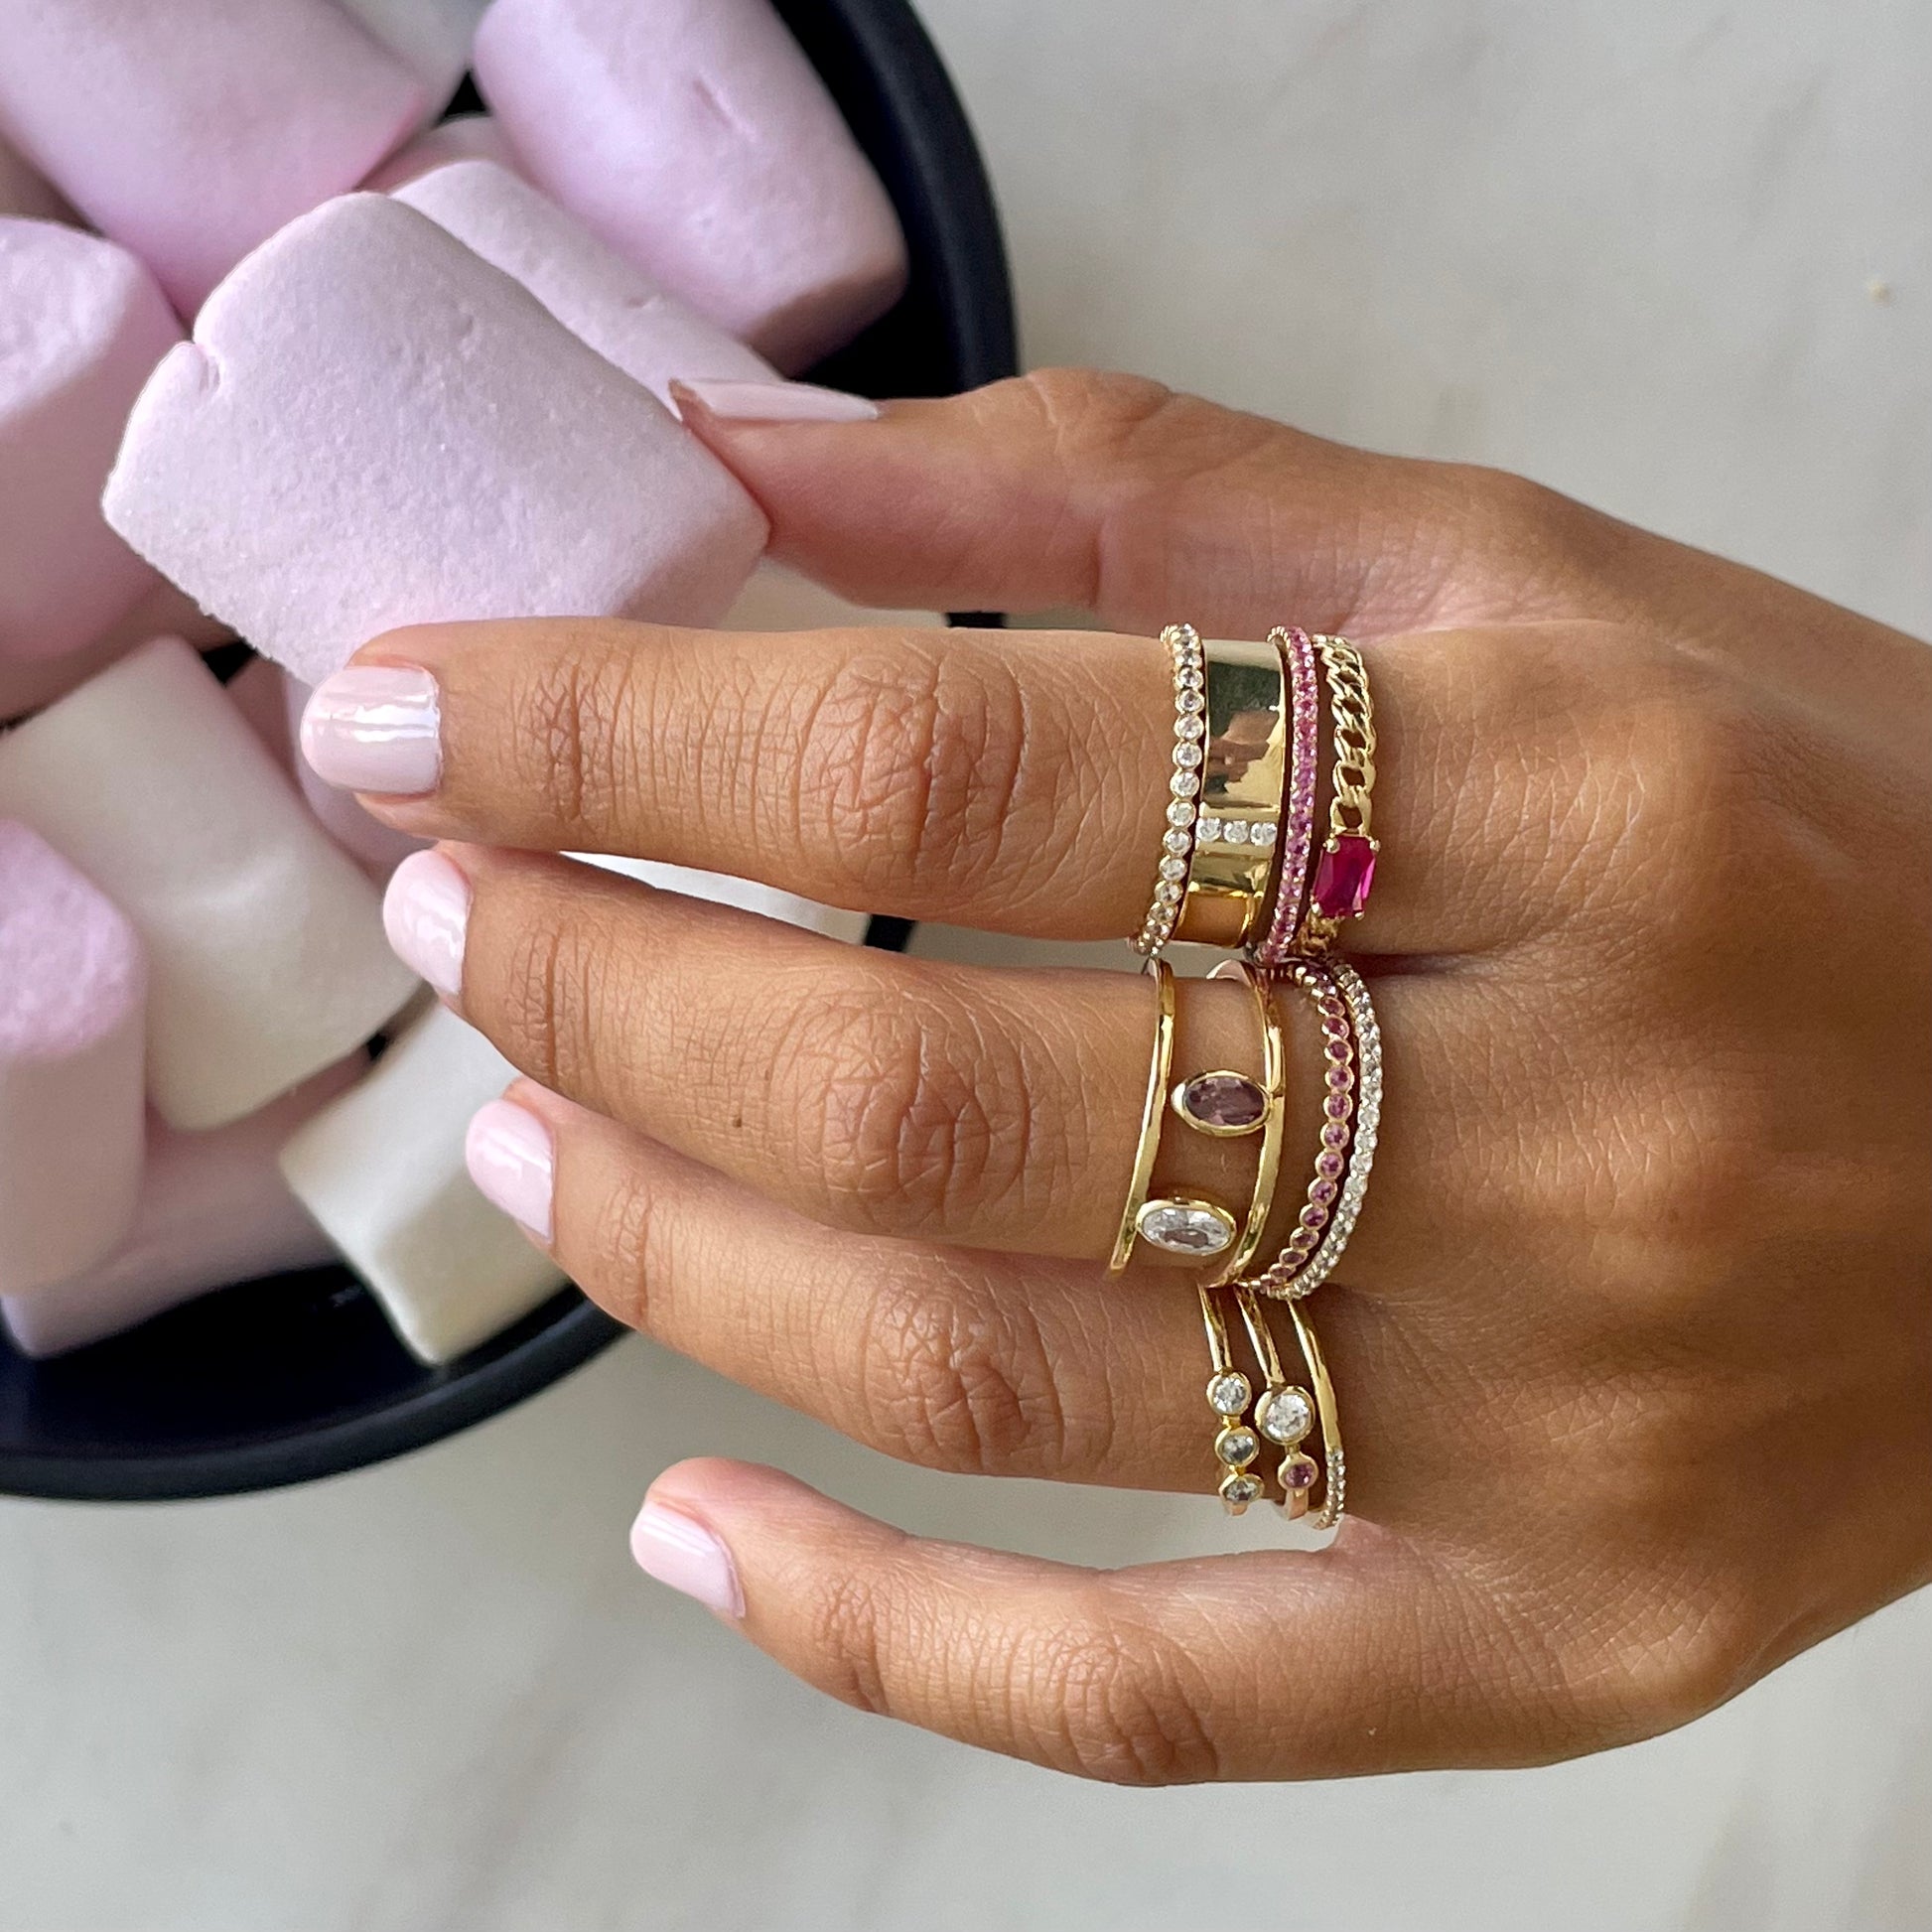 "Nina" Curb chain Link Diamond Ring - Pink - - Jewelry - Goldie Paris Jewelry - Ring